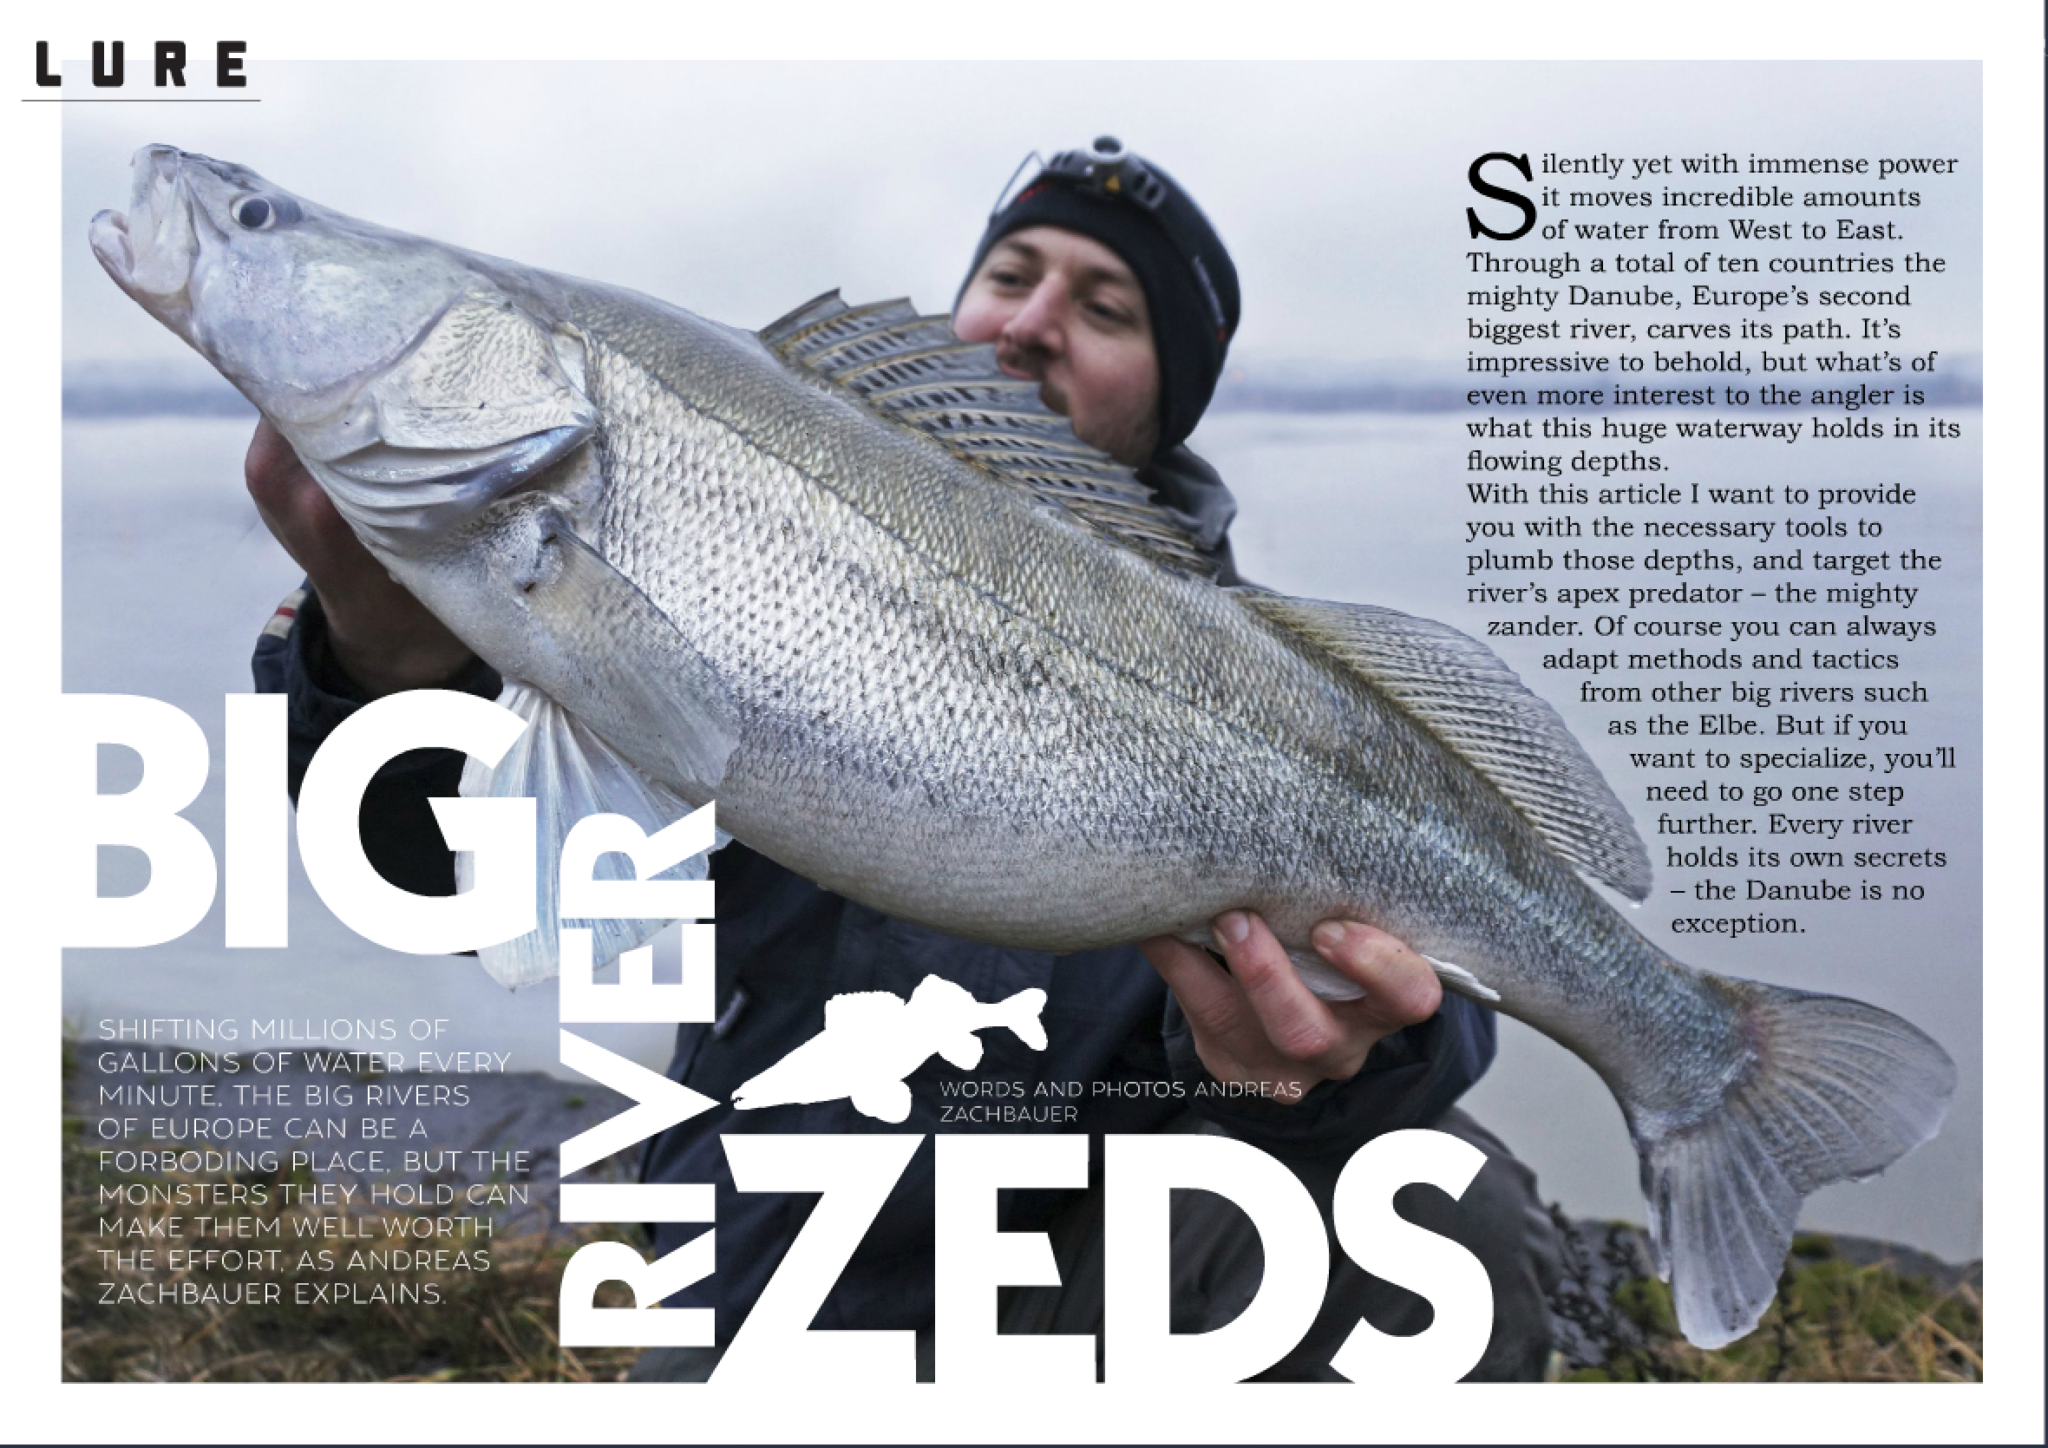 Big River Zeds (2017/02, LURE Magazine) - ToughAngler